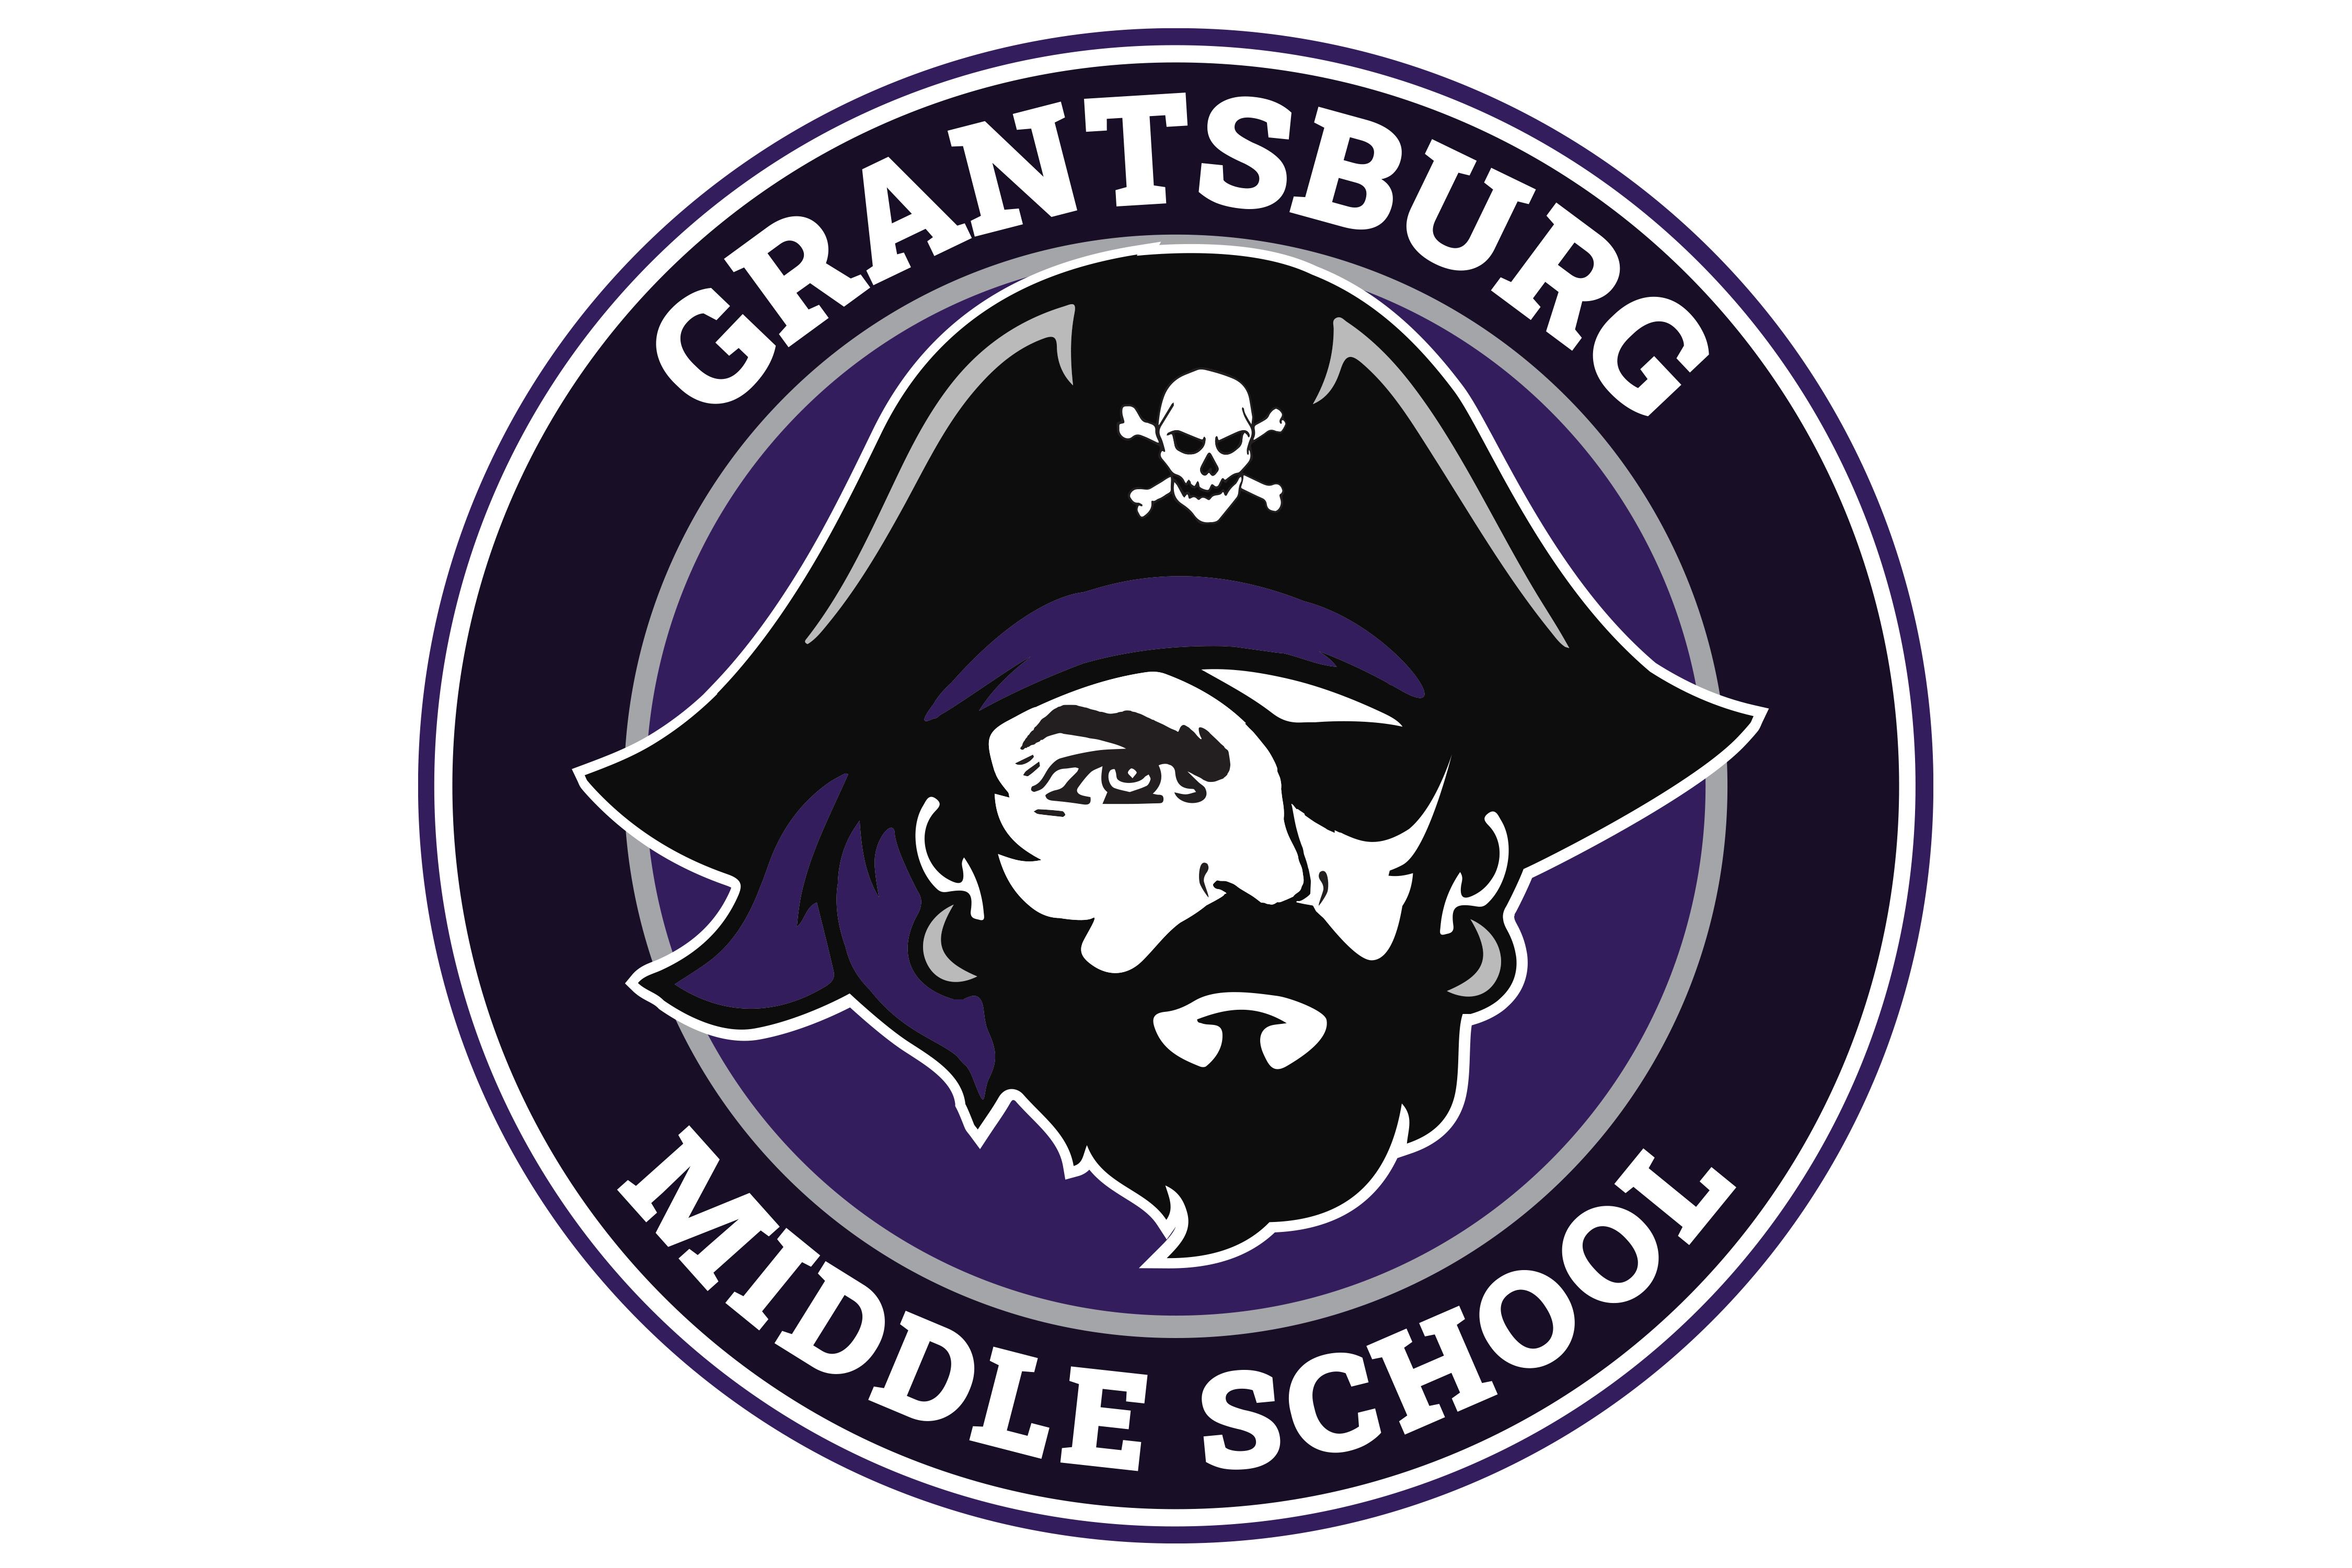 Grantsburg Middle School